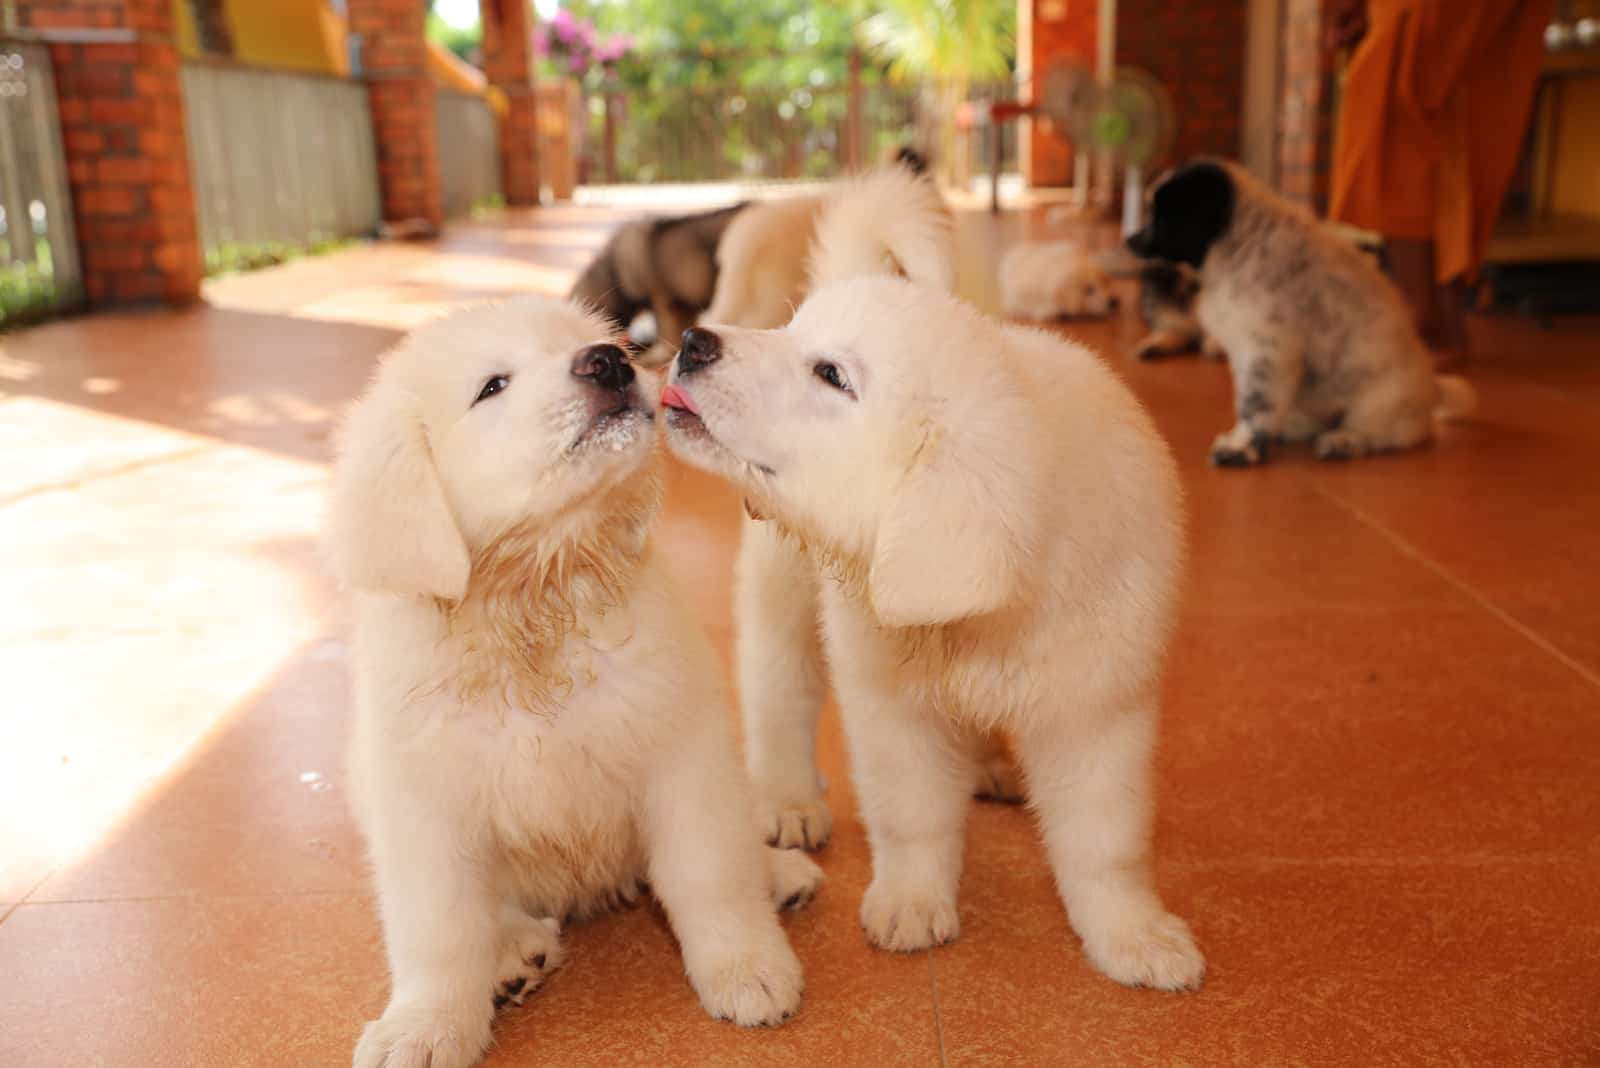 white dog licking other dog face